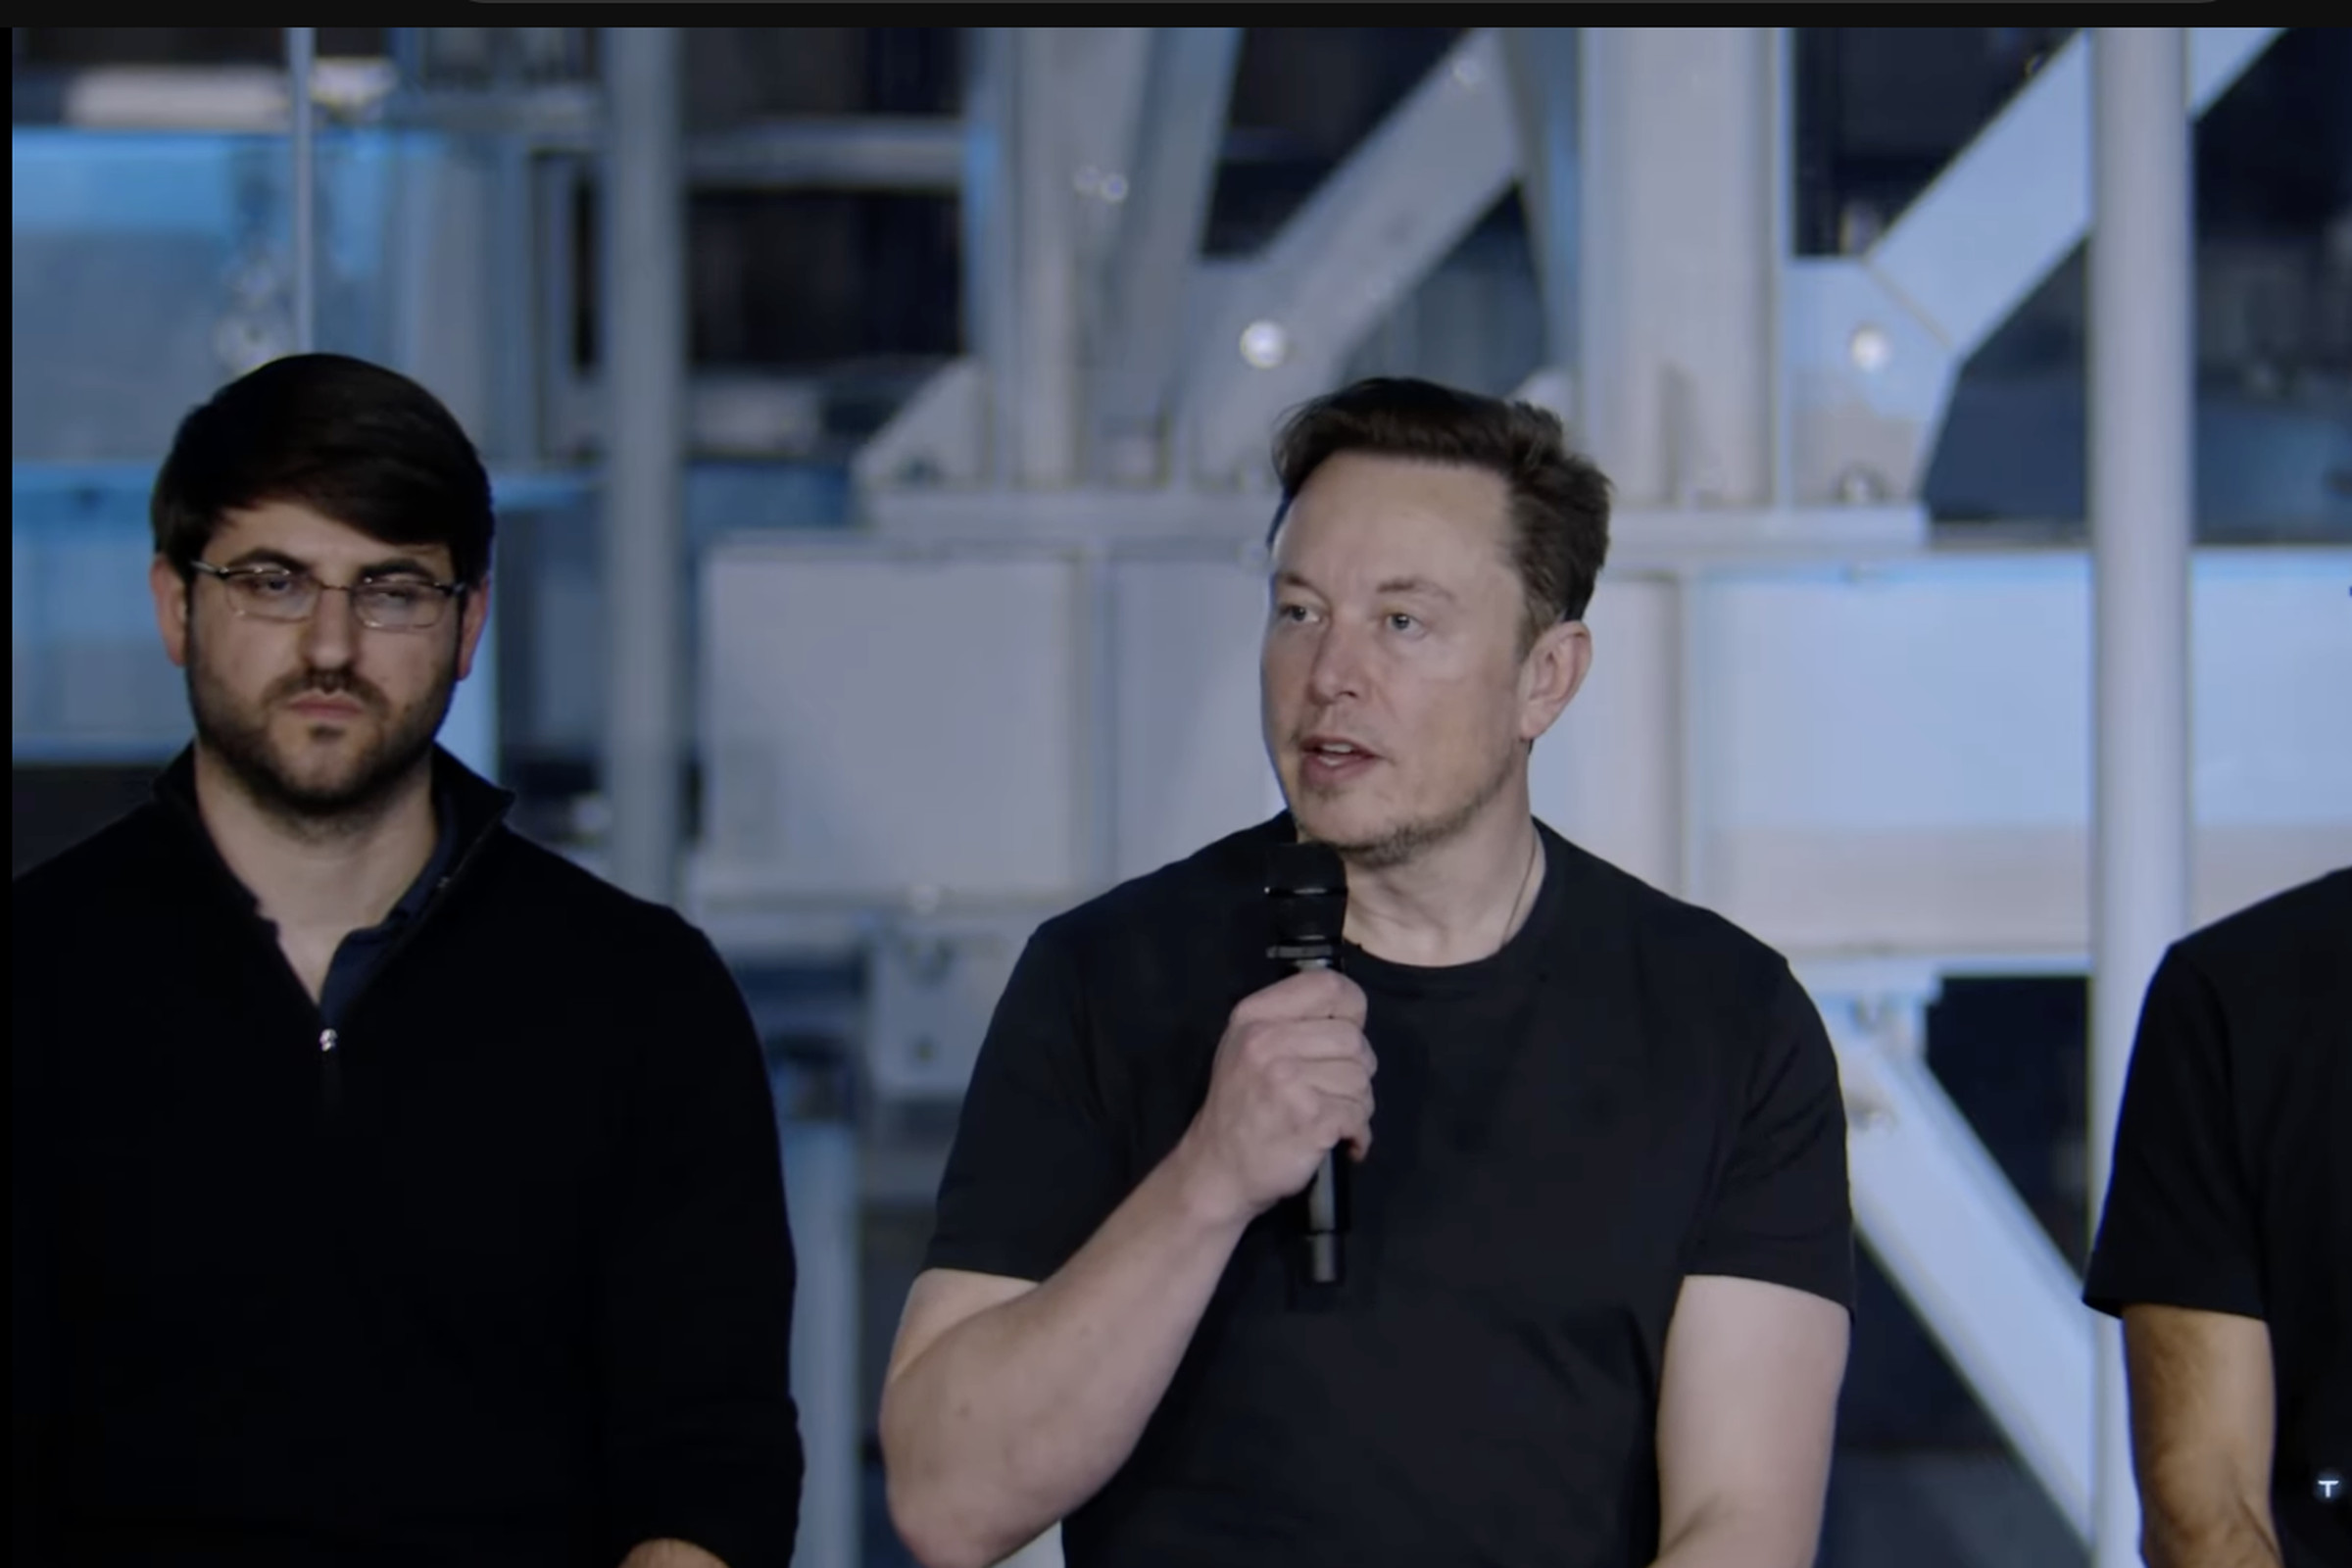 Tesla CFO Zachary Kirkhorn with Elon Musk